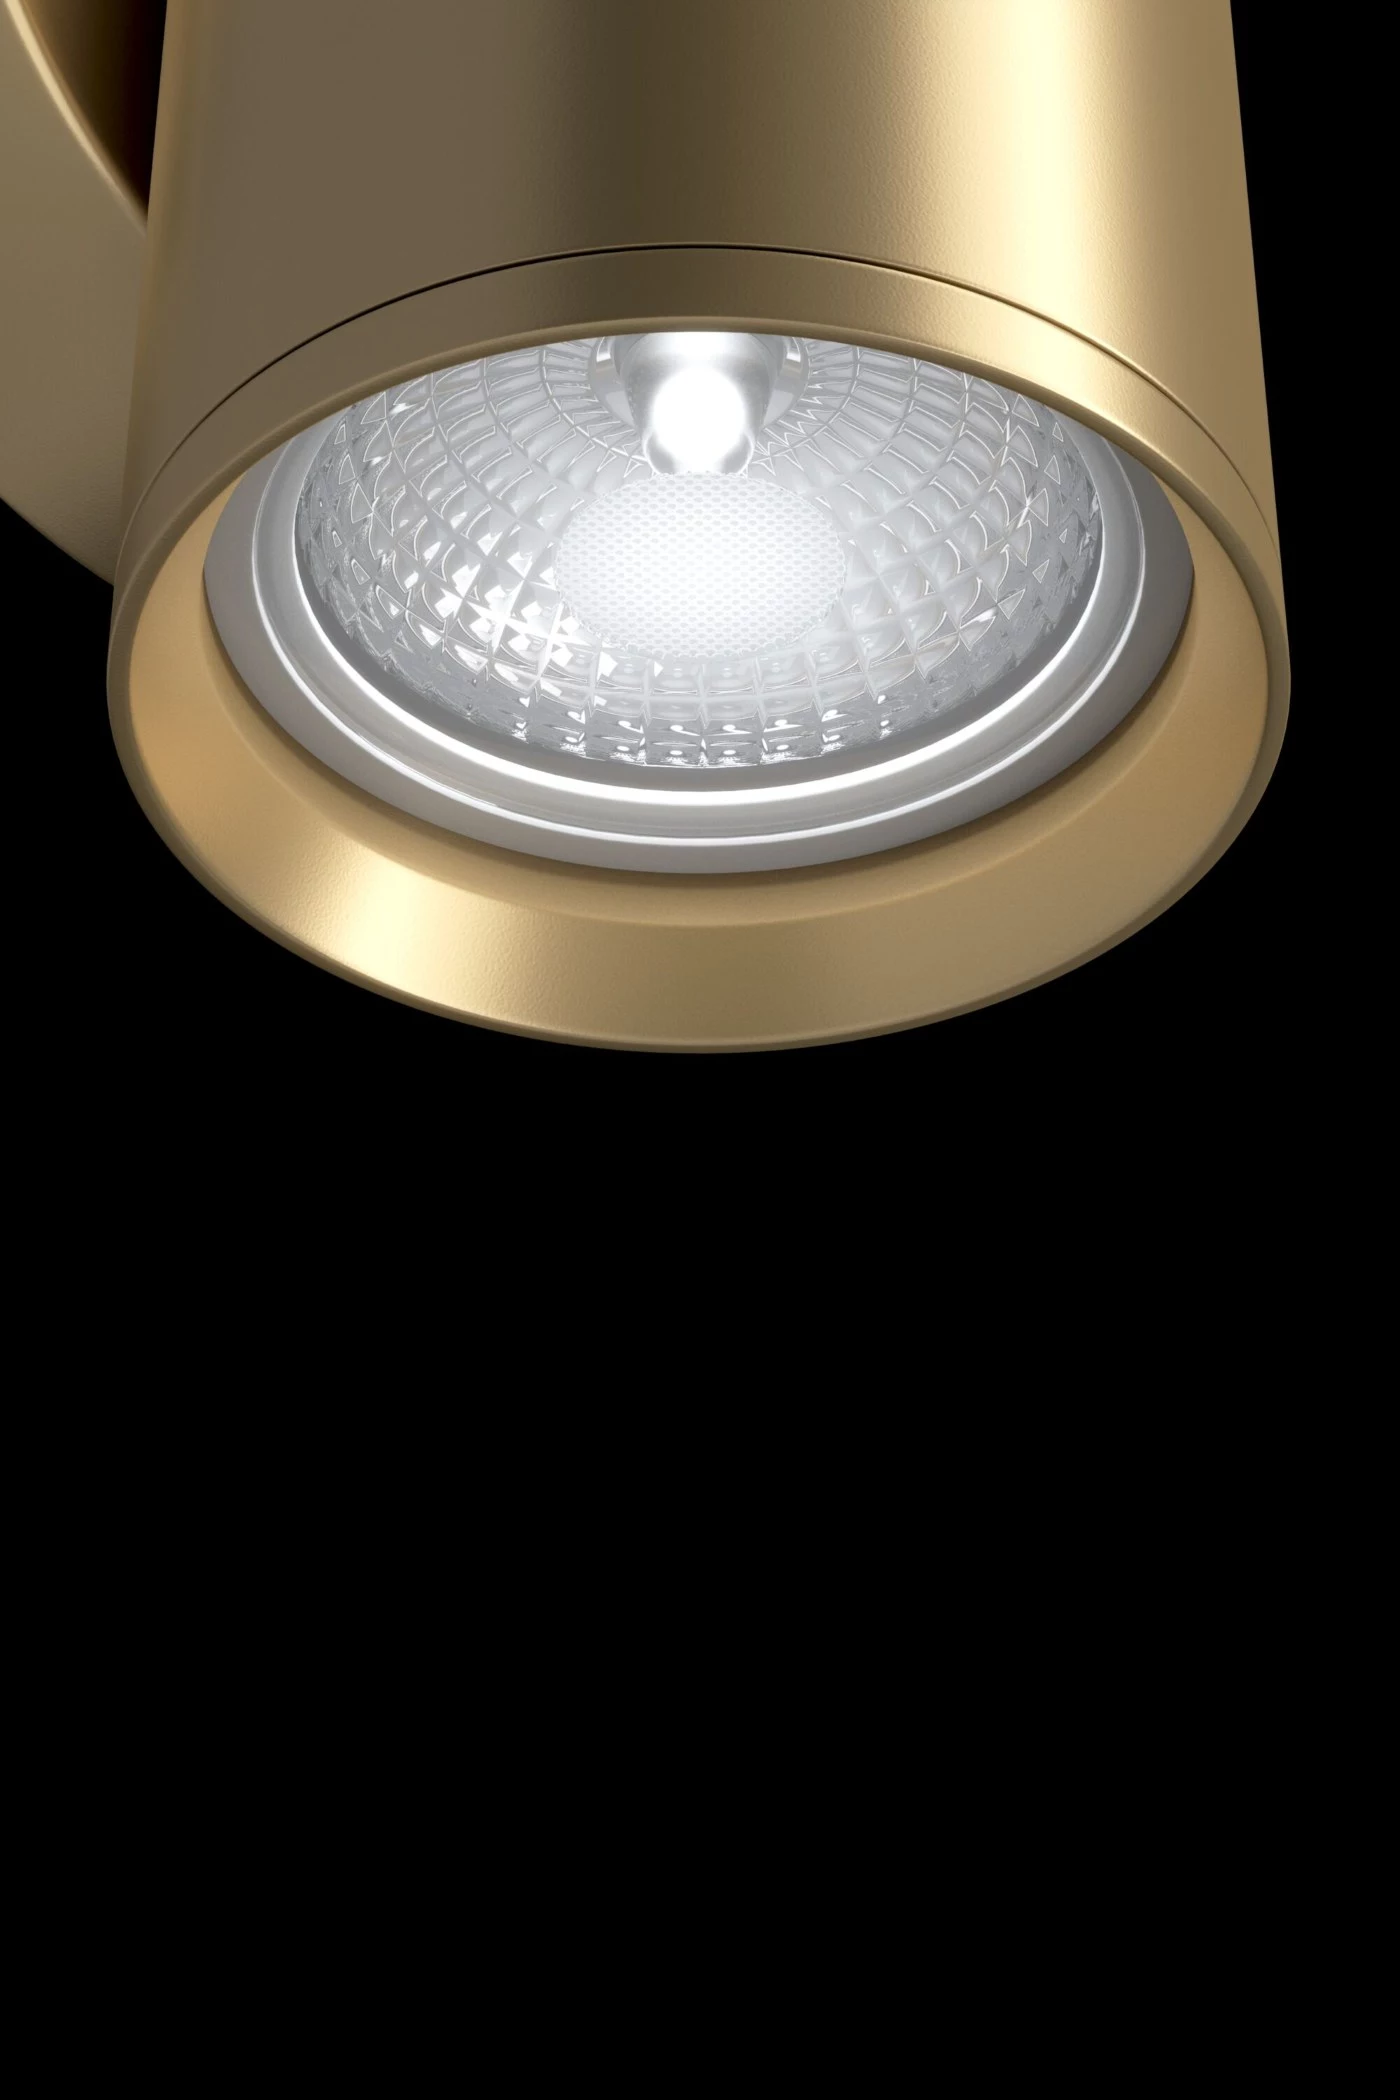   
                        Декоративная подсветка MAYTONI  (Германия) 40665    
                         в стиле Лофт.  
                        Тип источника света: светодиодная лампа, сменная.                                                 Цвета плафонов и подвесок: Золото.                         Материал: Алюминий.                          фото 4